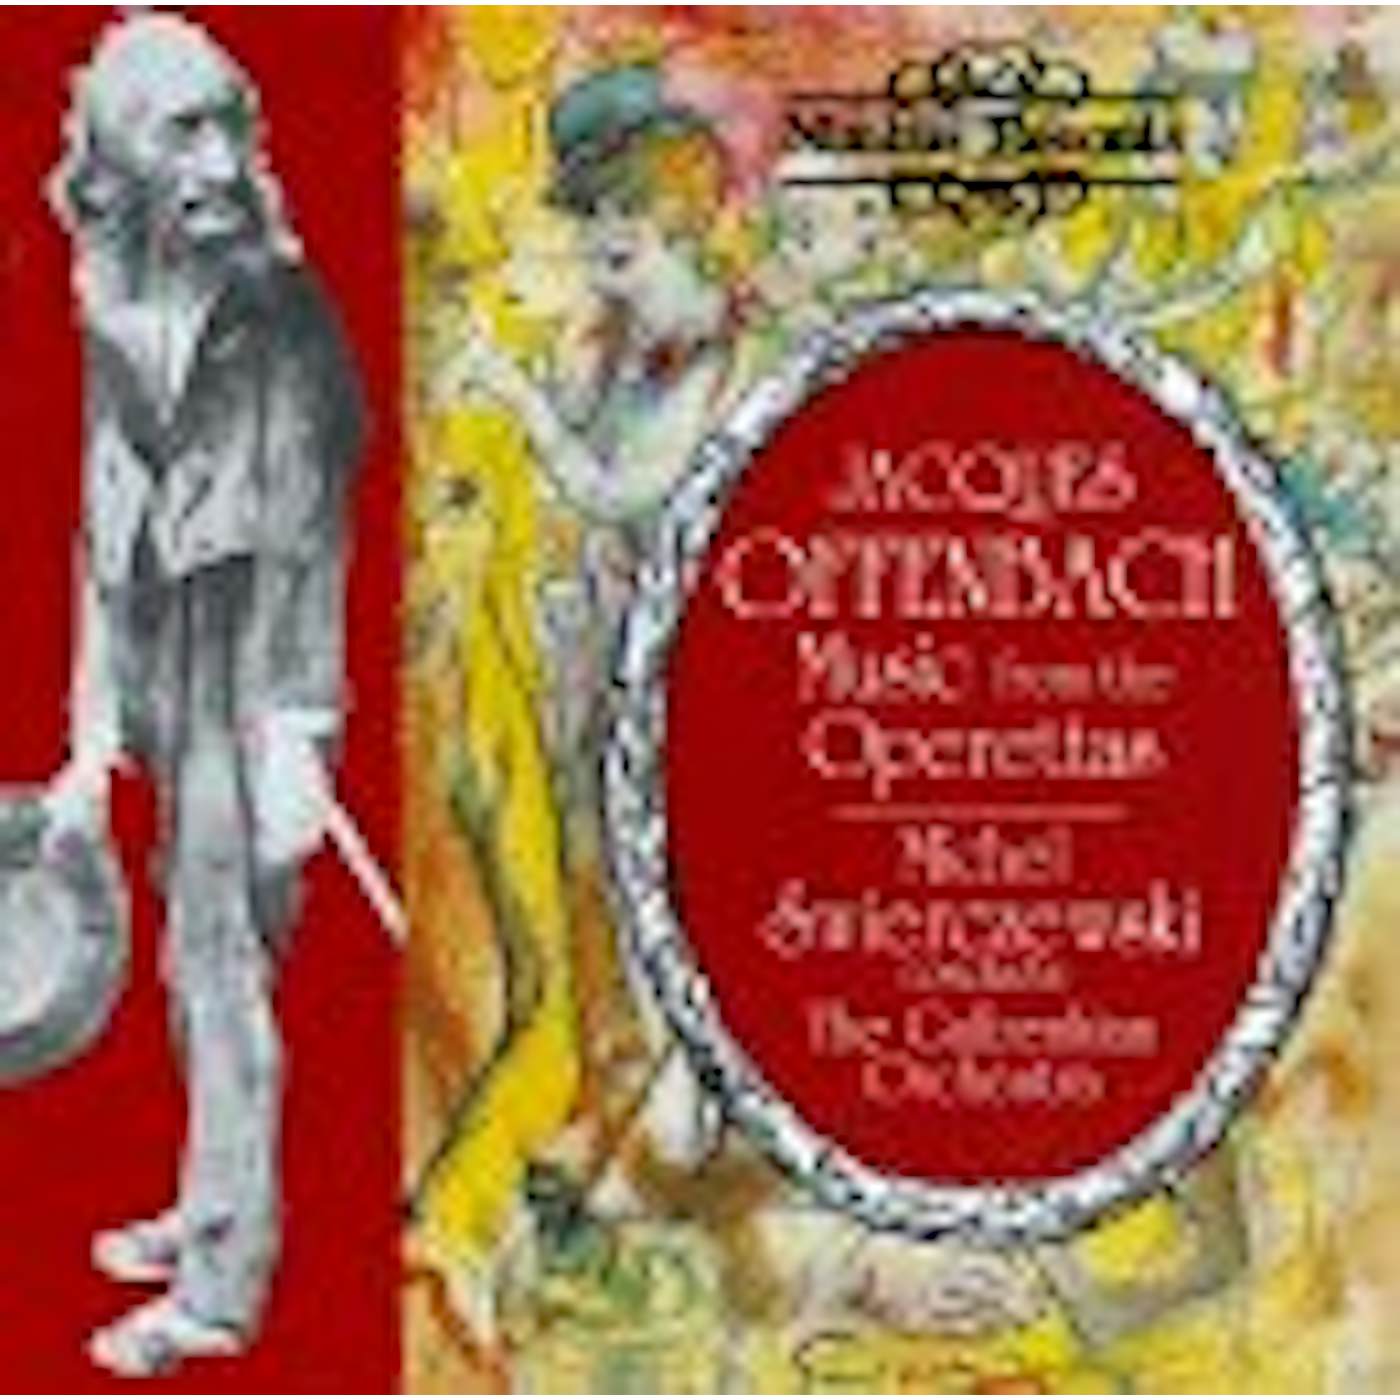 Offenbach MUSIC FROM OPERETTAS CD